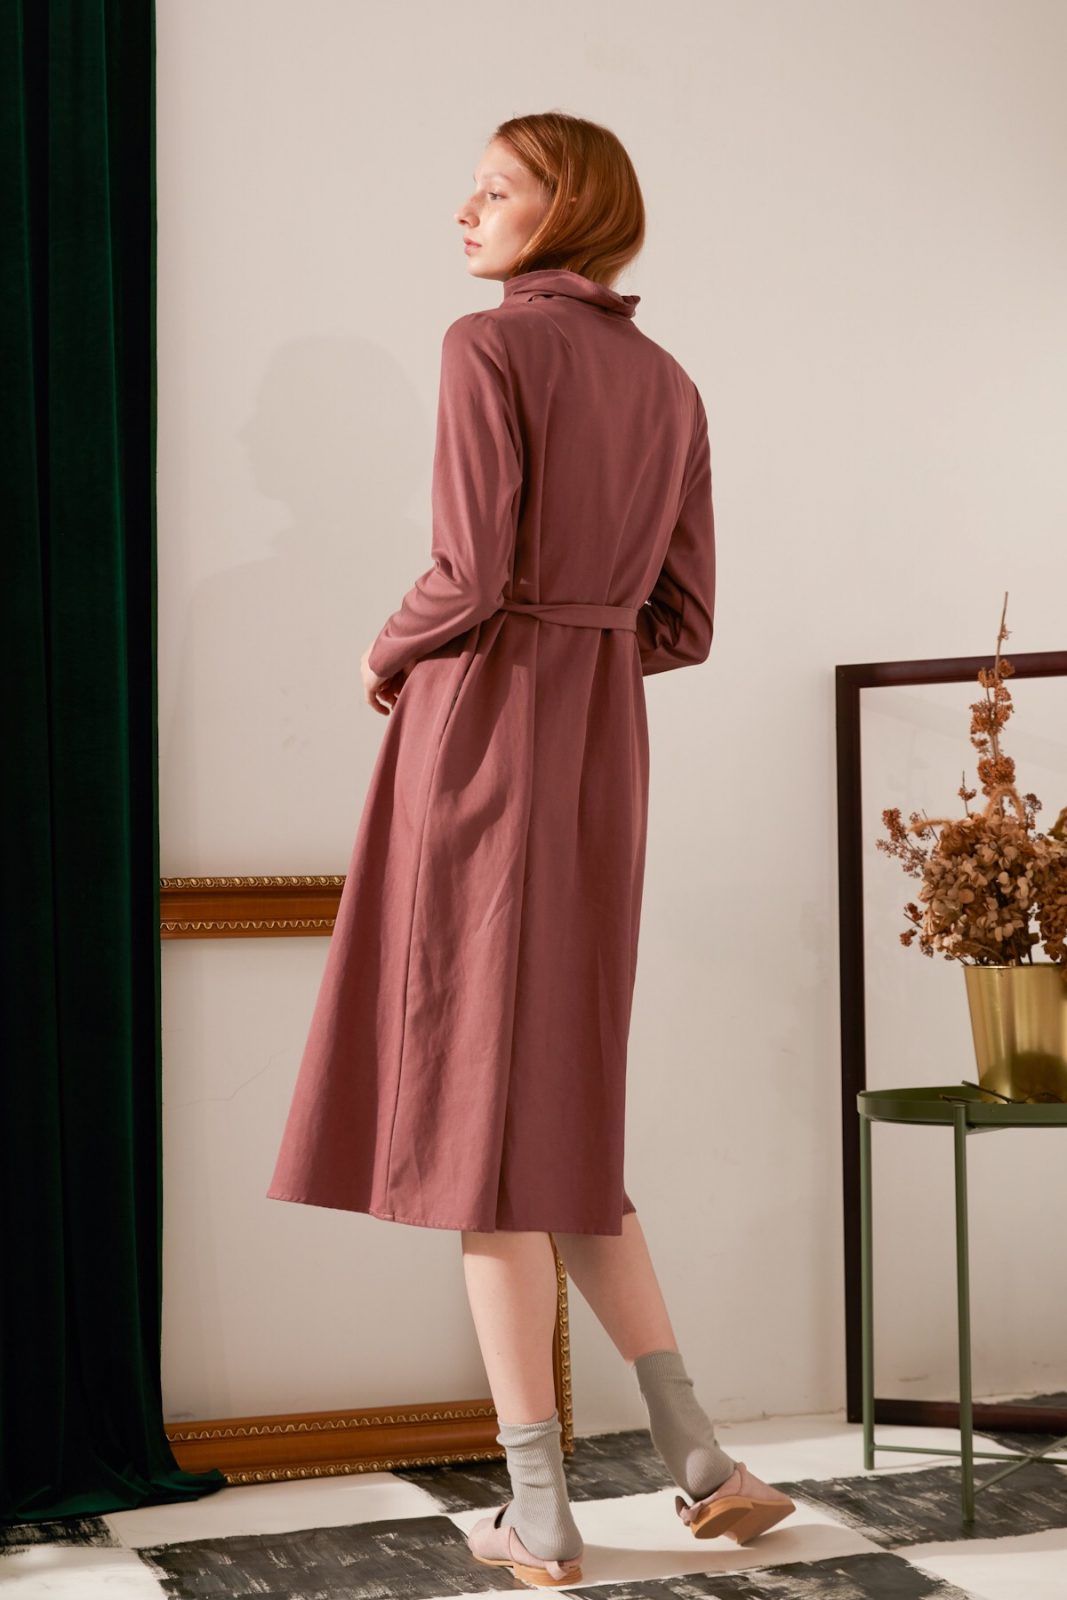 SKYE modern minimalist women fashion long sleeve asymmetrical high collar dress maroon 4